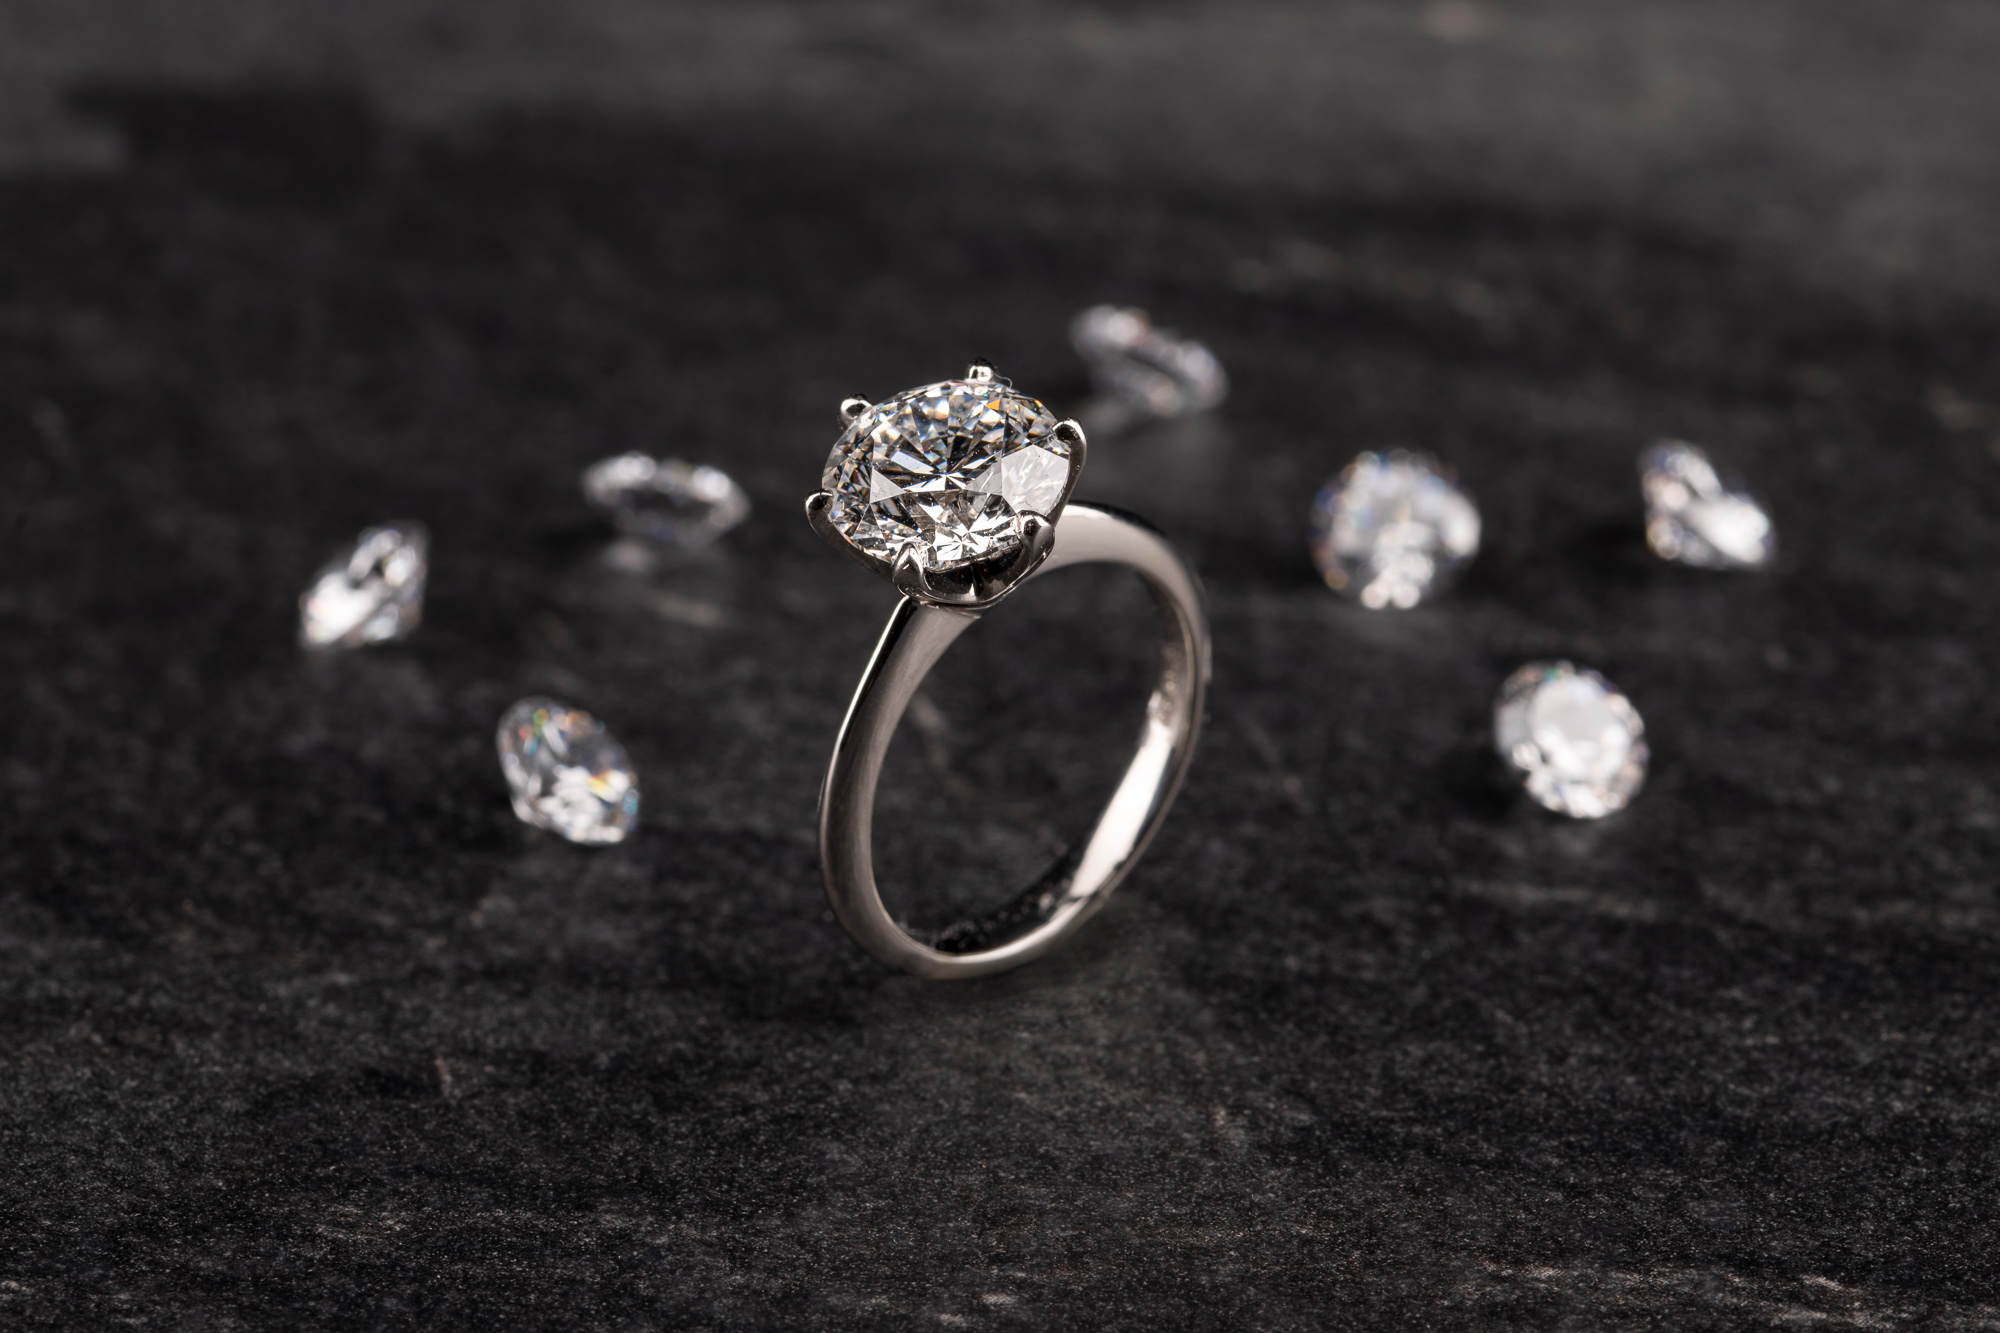 Mood - Solitär & Verlobungsring (Engagement Ring) und lose Diamanten: “Princess” 6-Prong Knife-Edge. Labor Diamanten, Lab Grown Diamonds. Green World Diamonds.